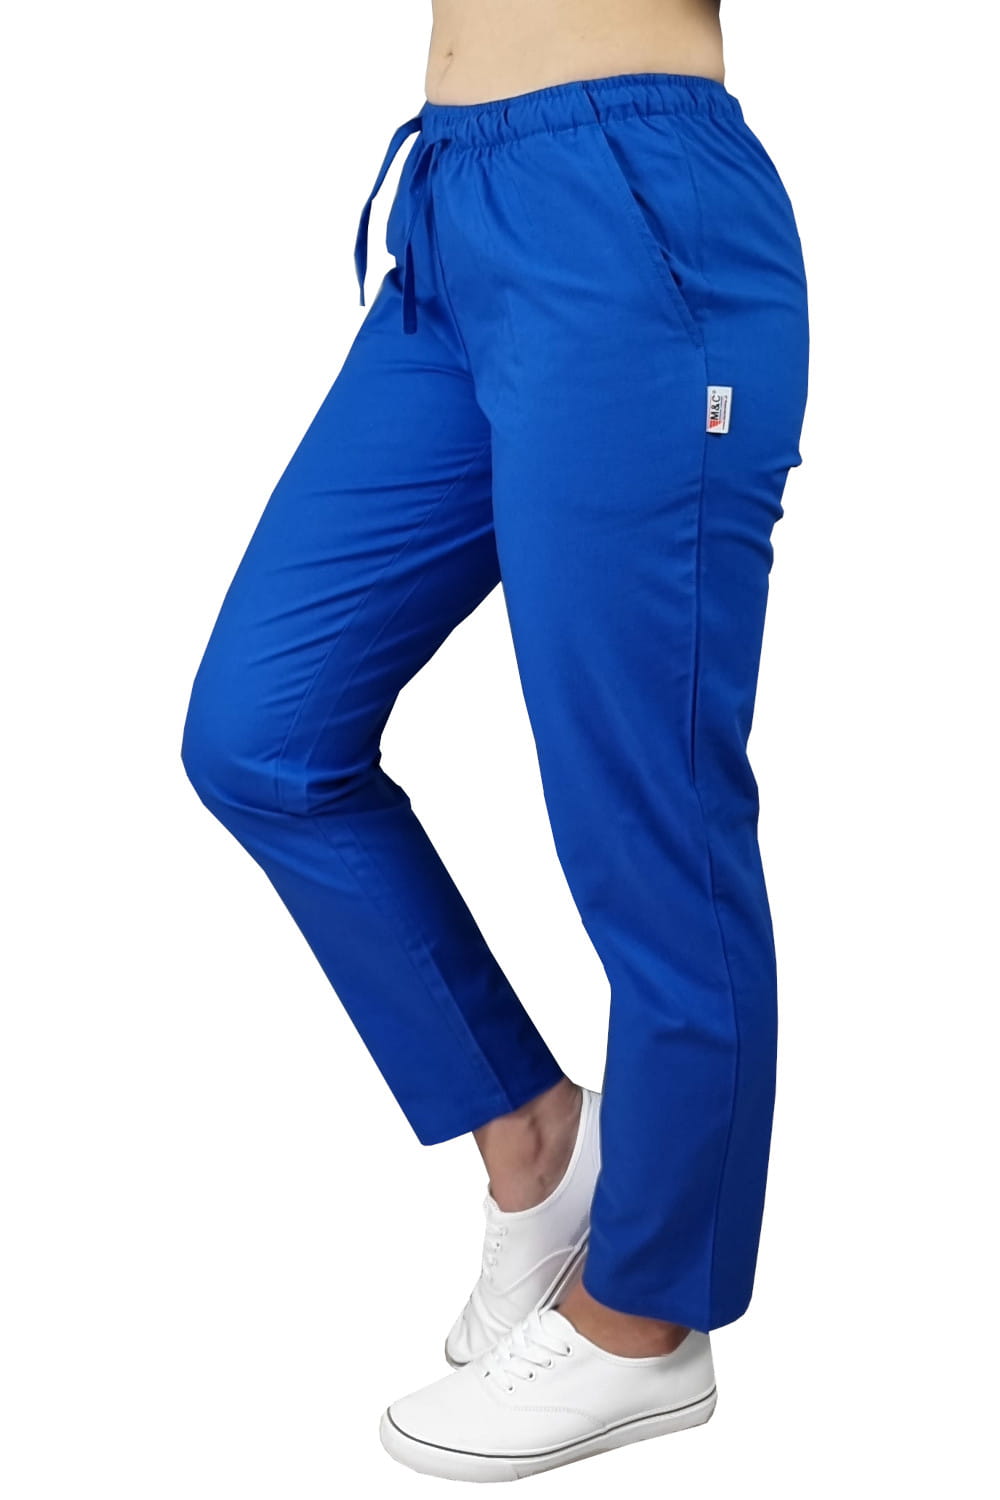 Zdravotnícke dámske bavlnené nohavice-Kráľovská modrá #2